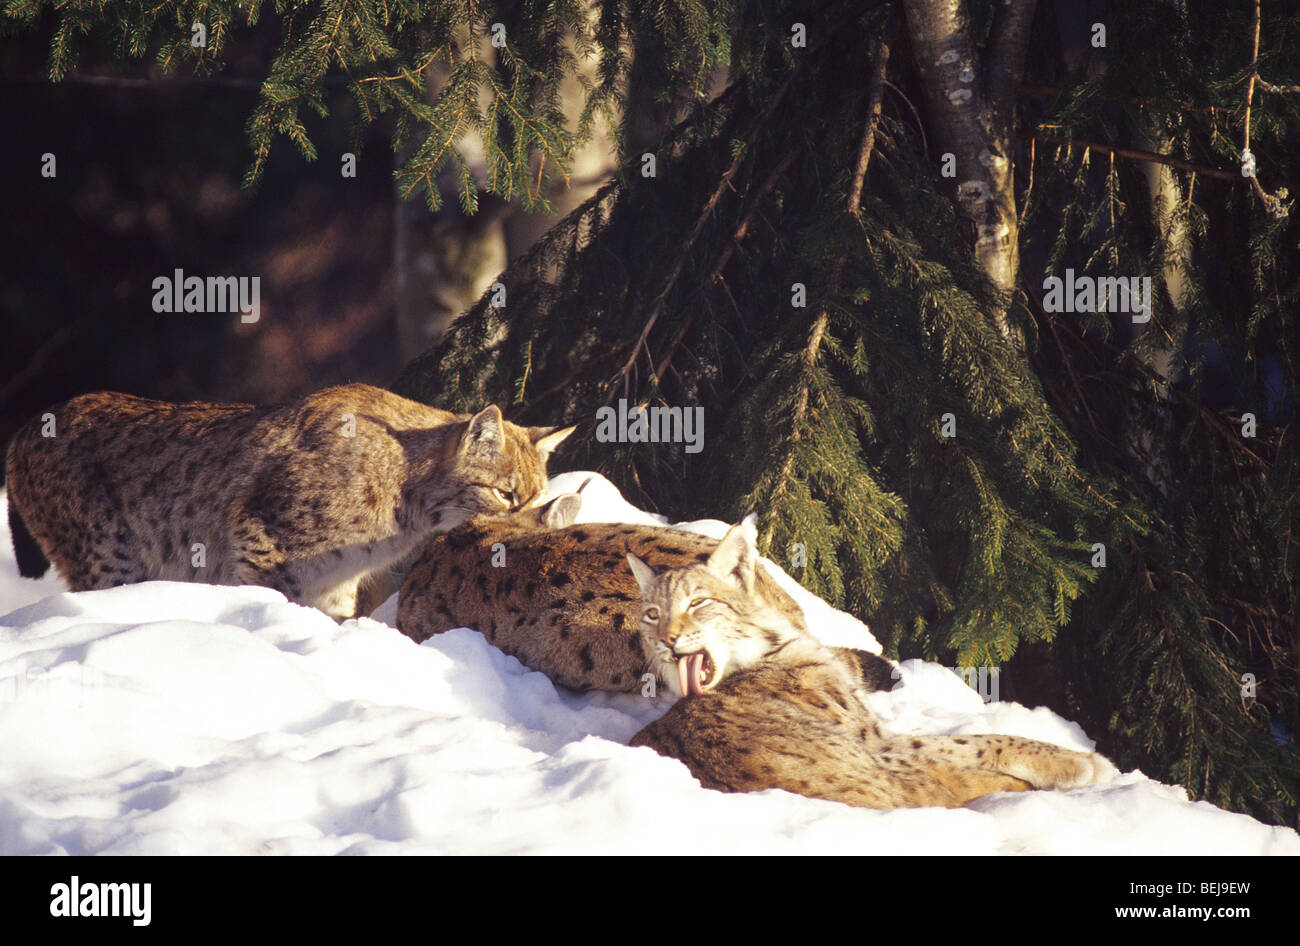 Lynx, Bayerischer wald national Park, Germany Europe Stock Photo